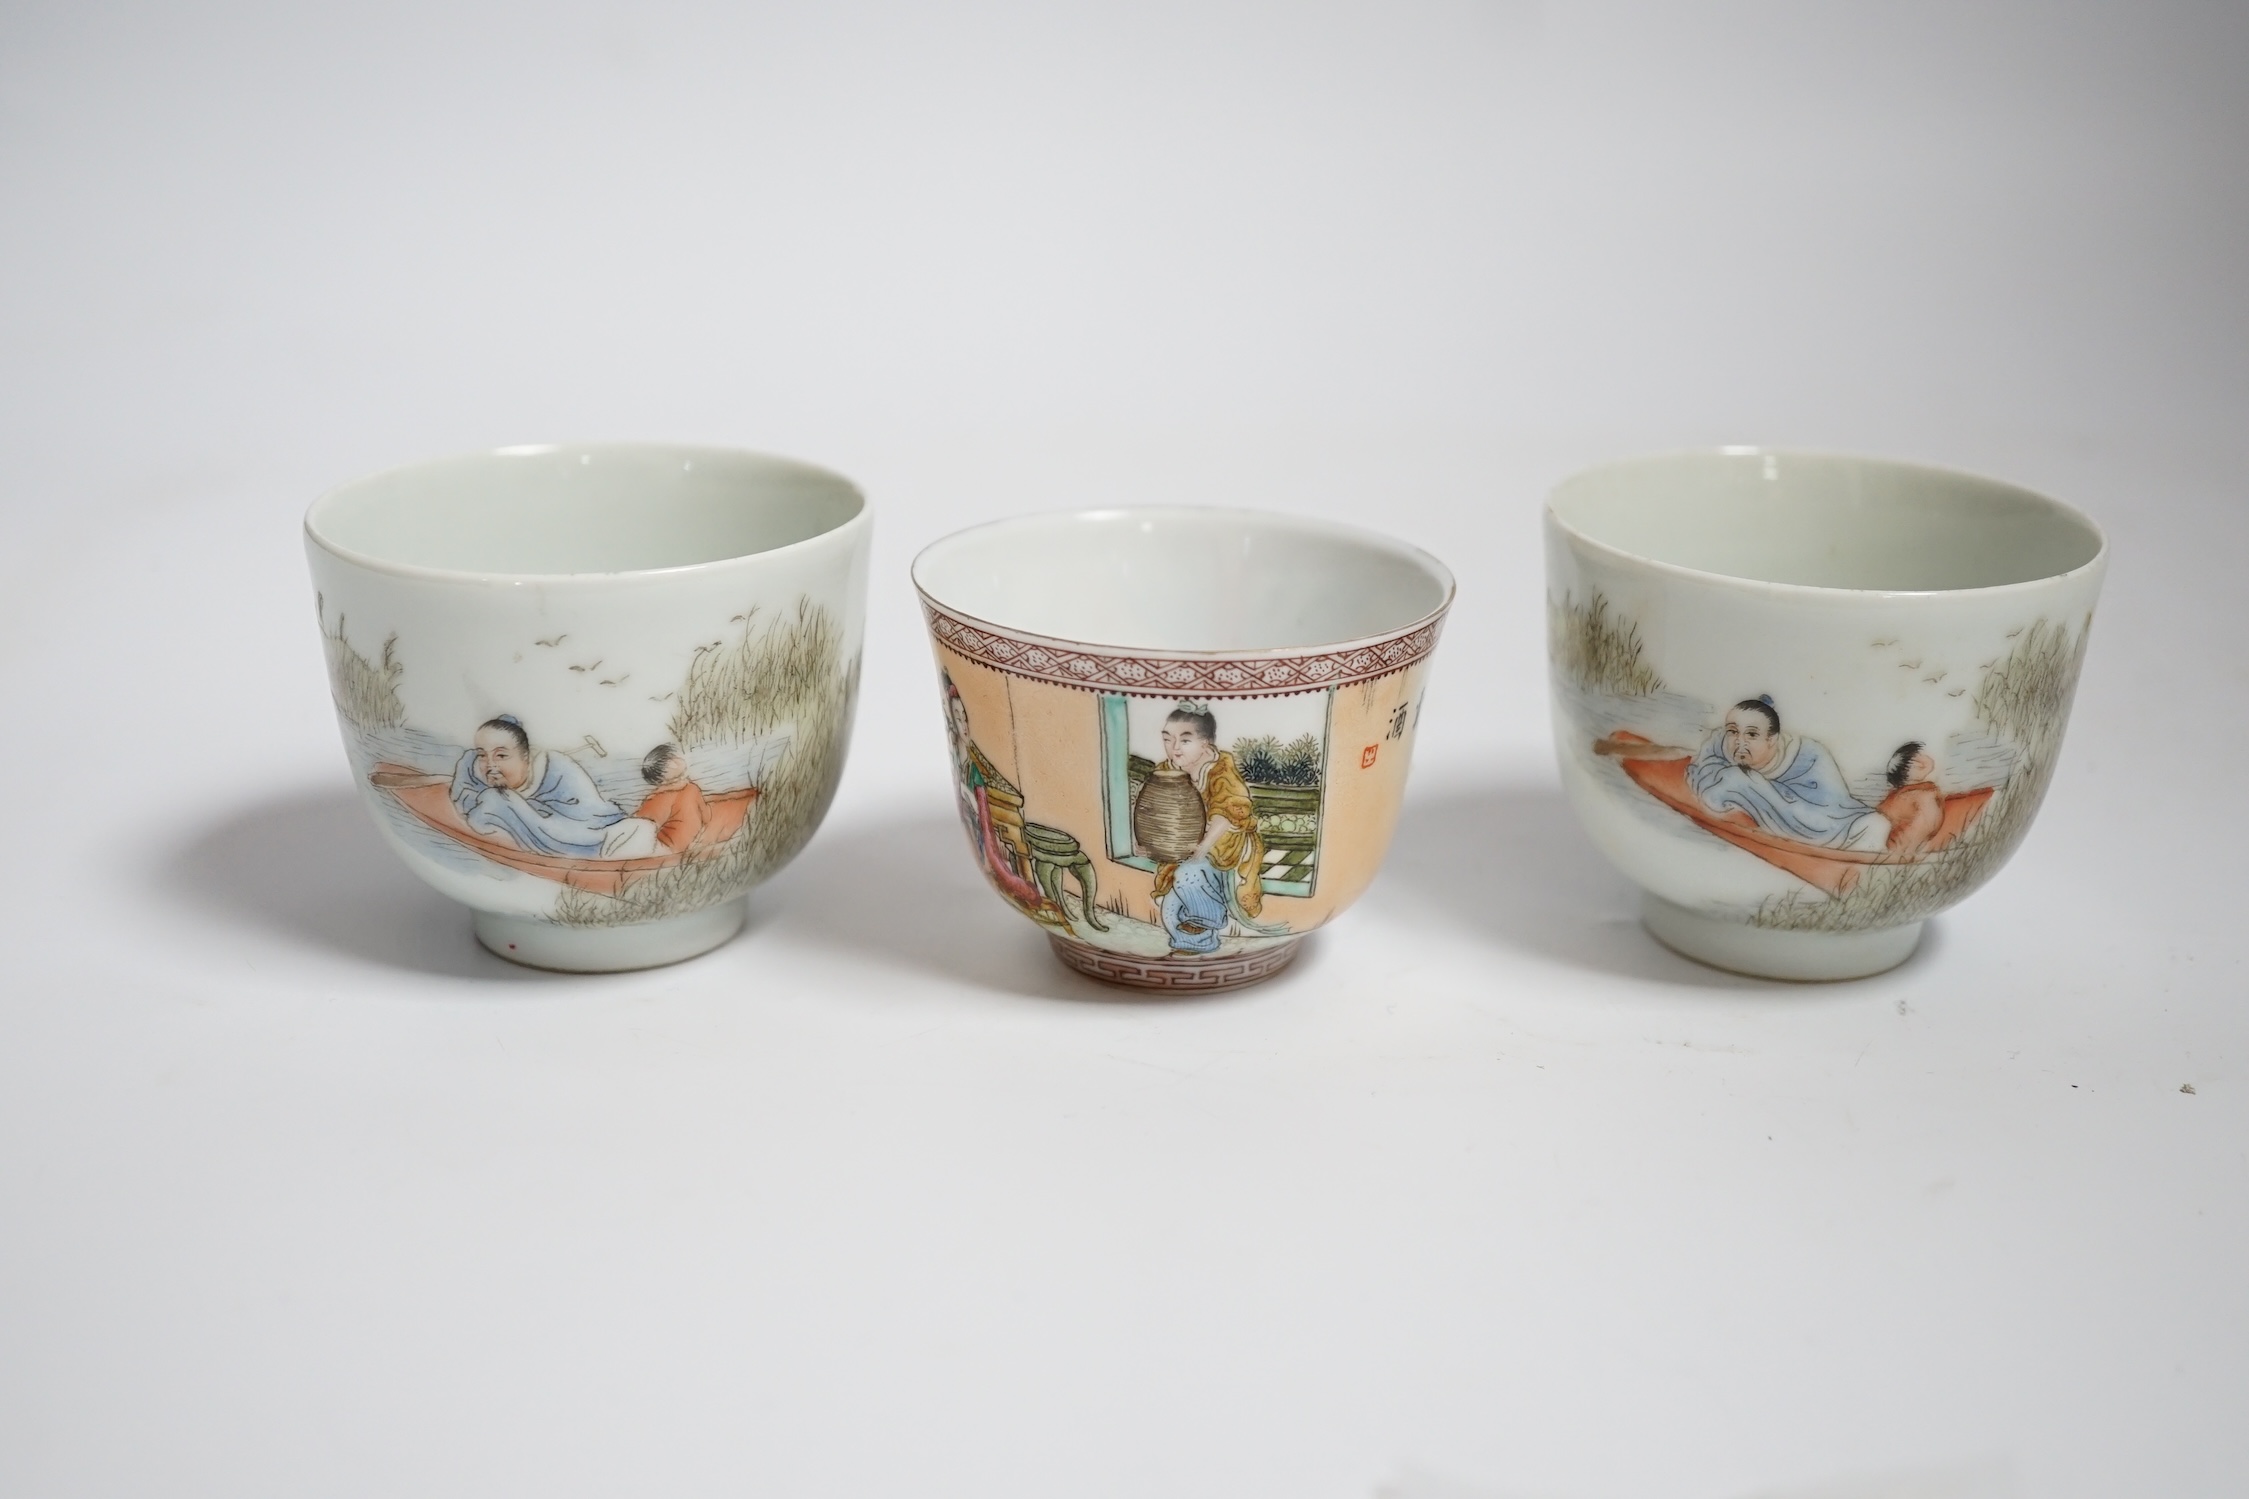 Three Chinese enamelled porcelain tea bowls, largest 5cm high